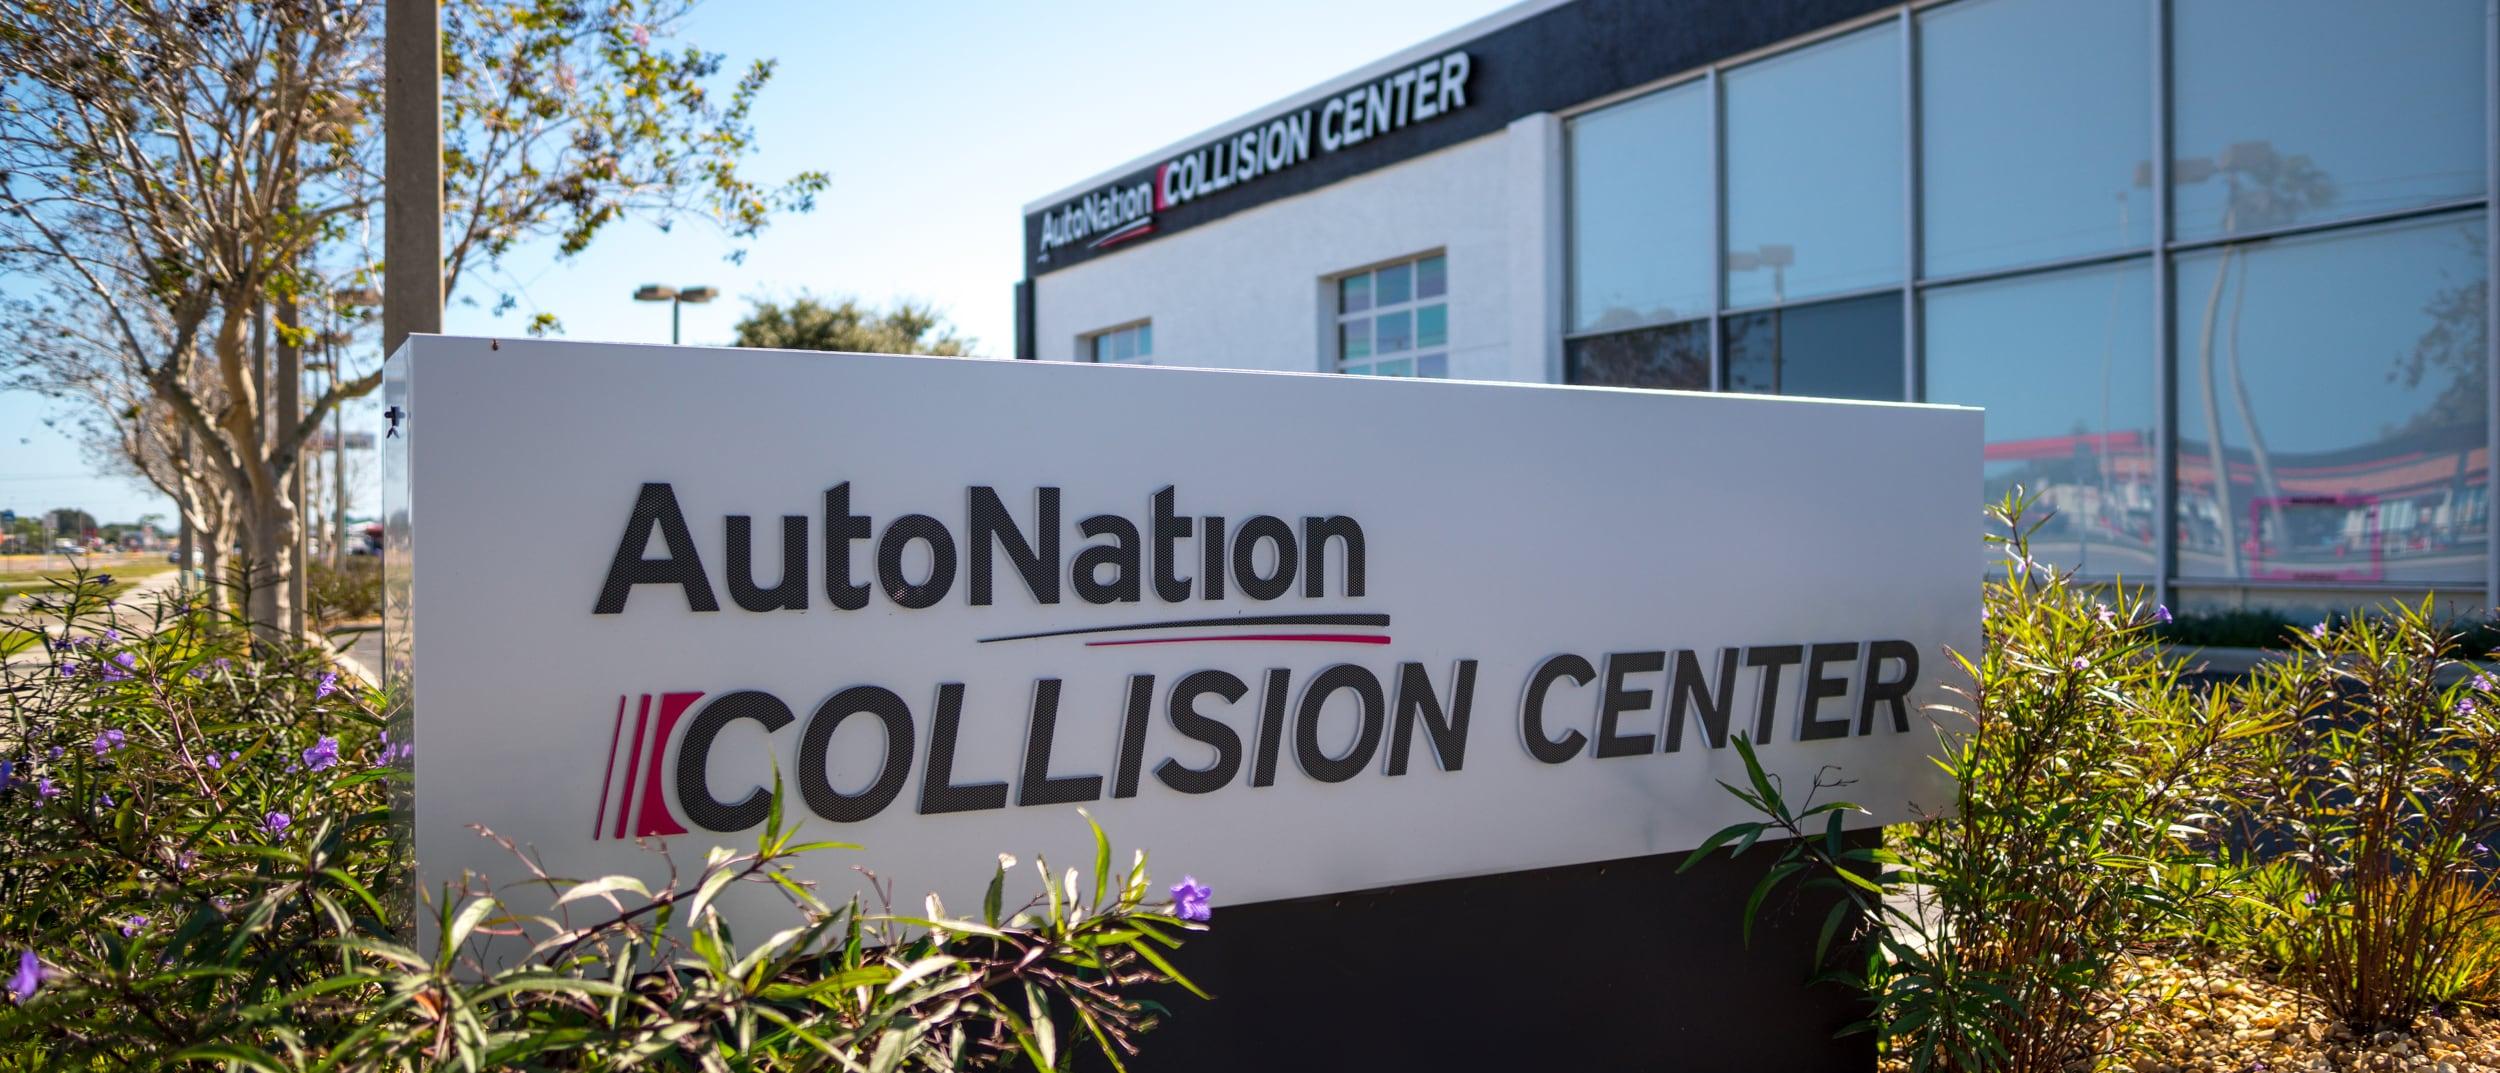 View of AutoNation Collision Center sign at AutoNation Chevrolet West Colonial